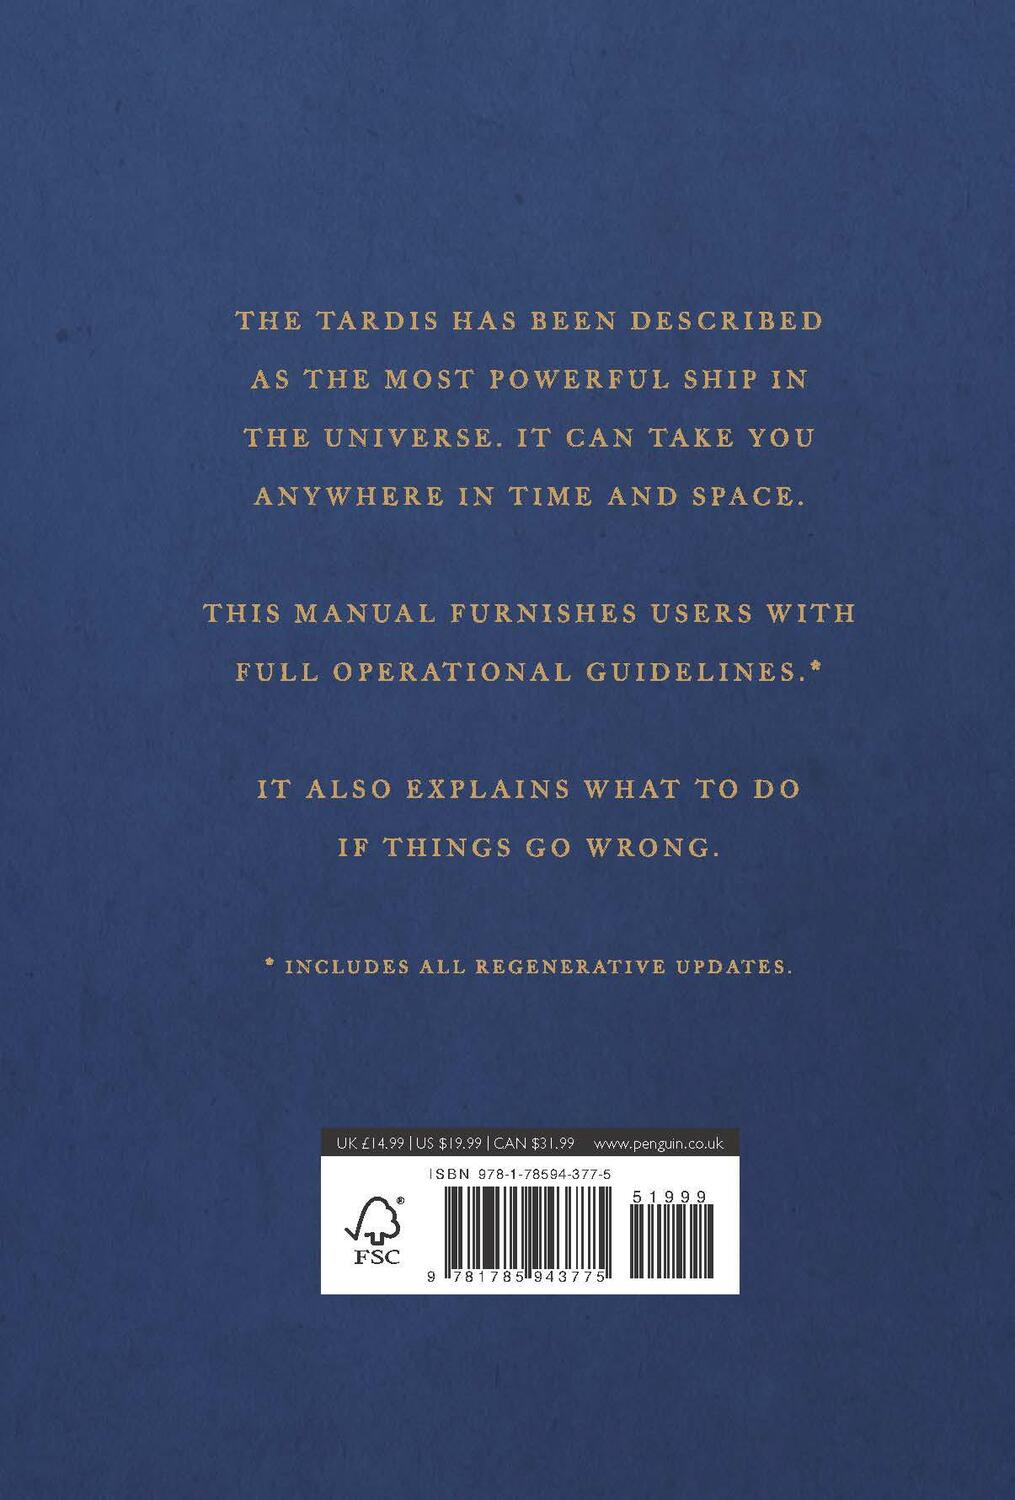 Rückseite: 9781785943775 | Doctor Who: TARDIS Type 40 Instruction Manual | Atkinson (u. a.)